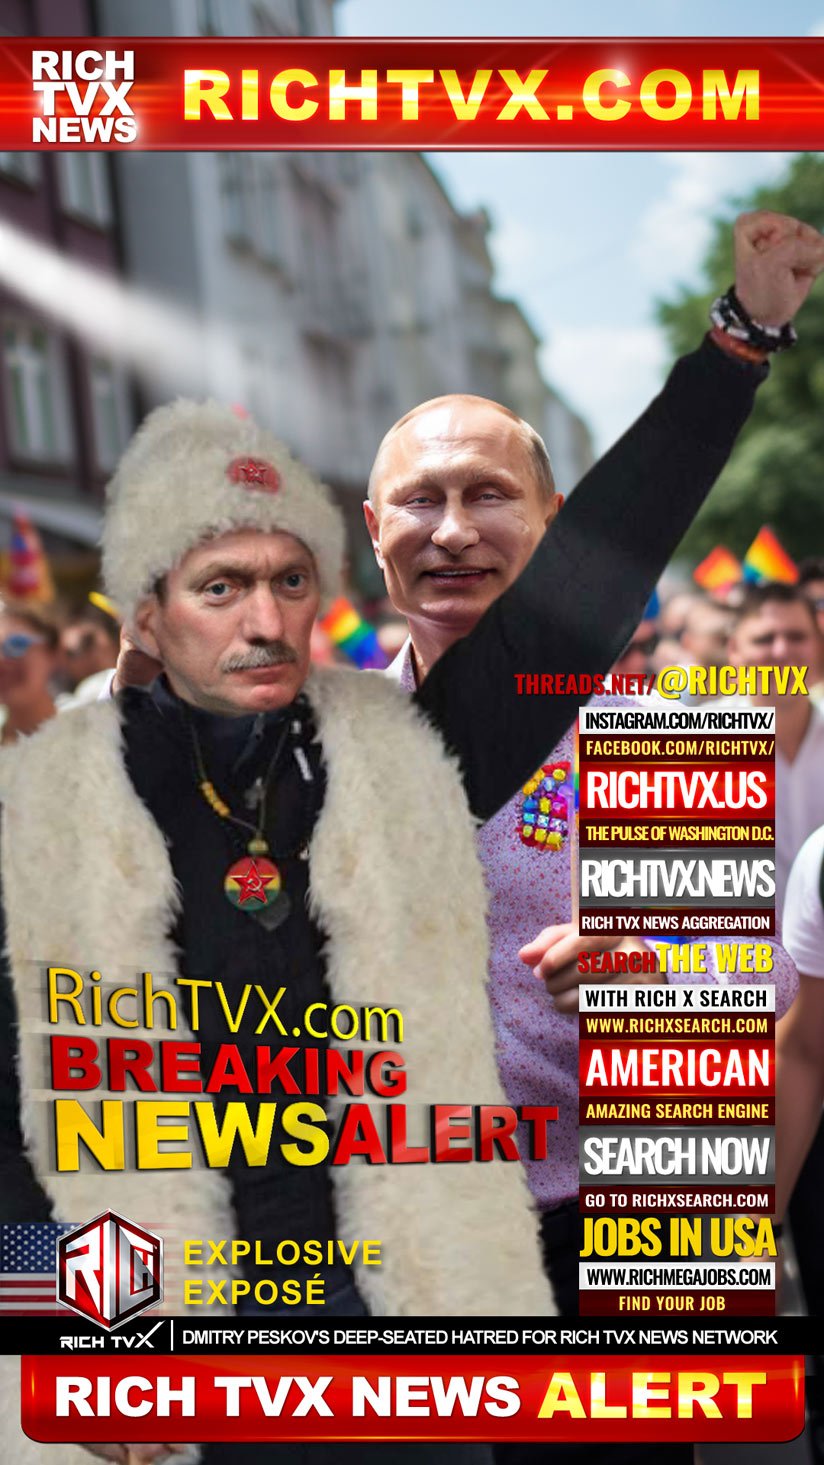 Explosive Exposé: Dmitry Peskov’s Deep-Seated Hatred for Rich TVX News Network